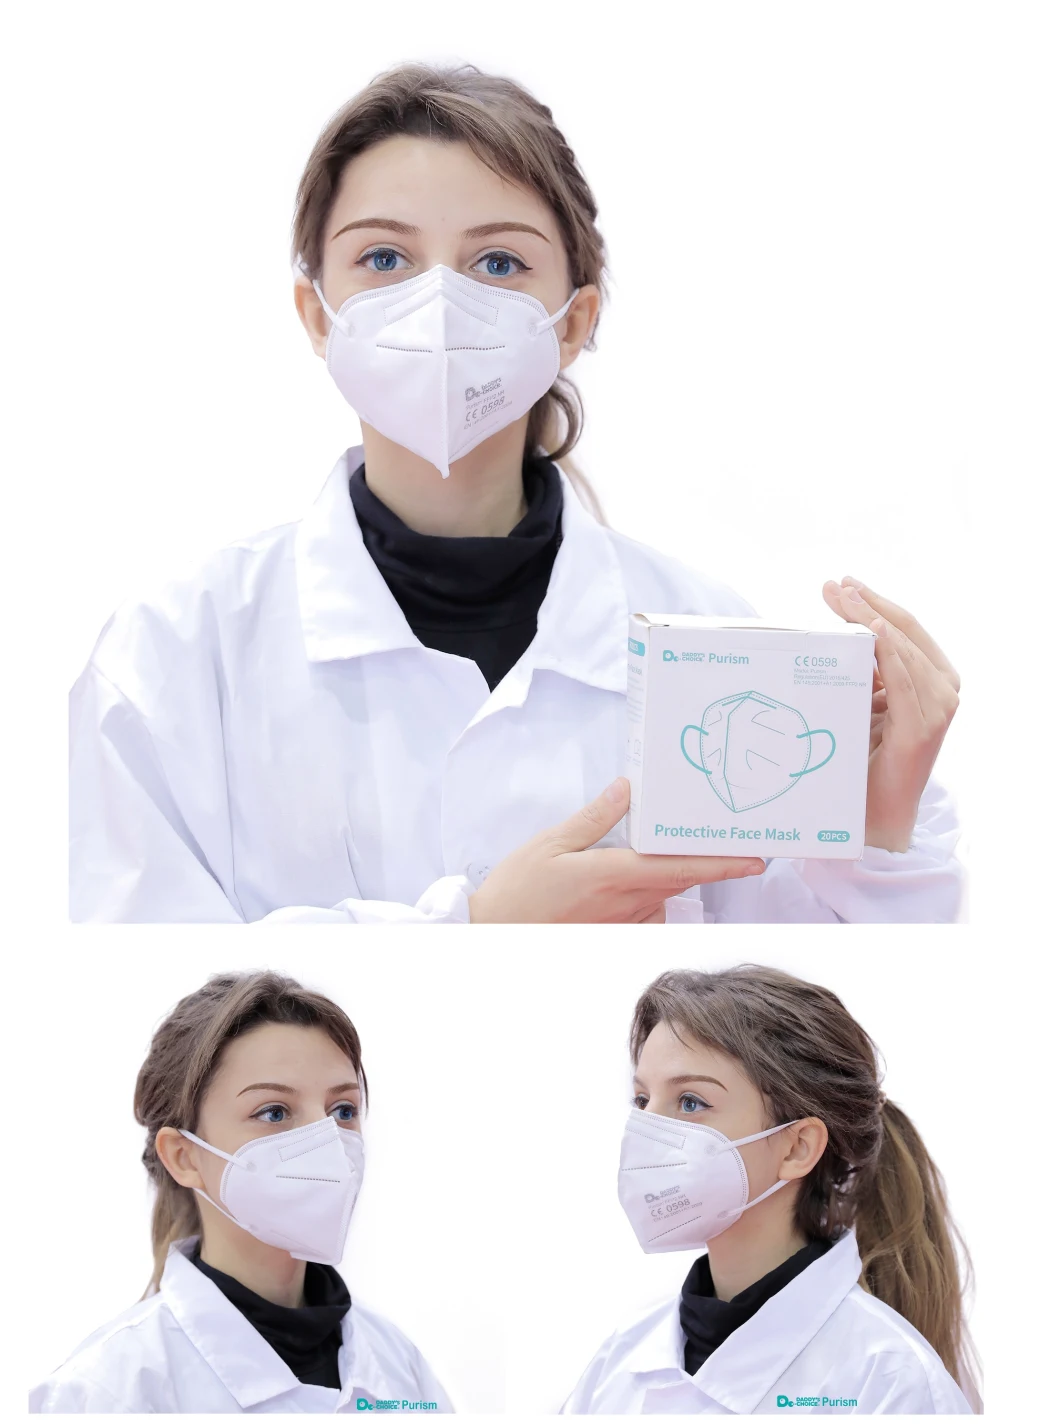 Hygiene Respiratory Supplier Carbon Filter Factory Logo FFP2 KN95 Face Mask